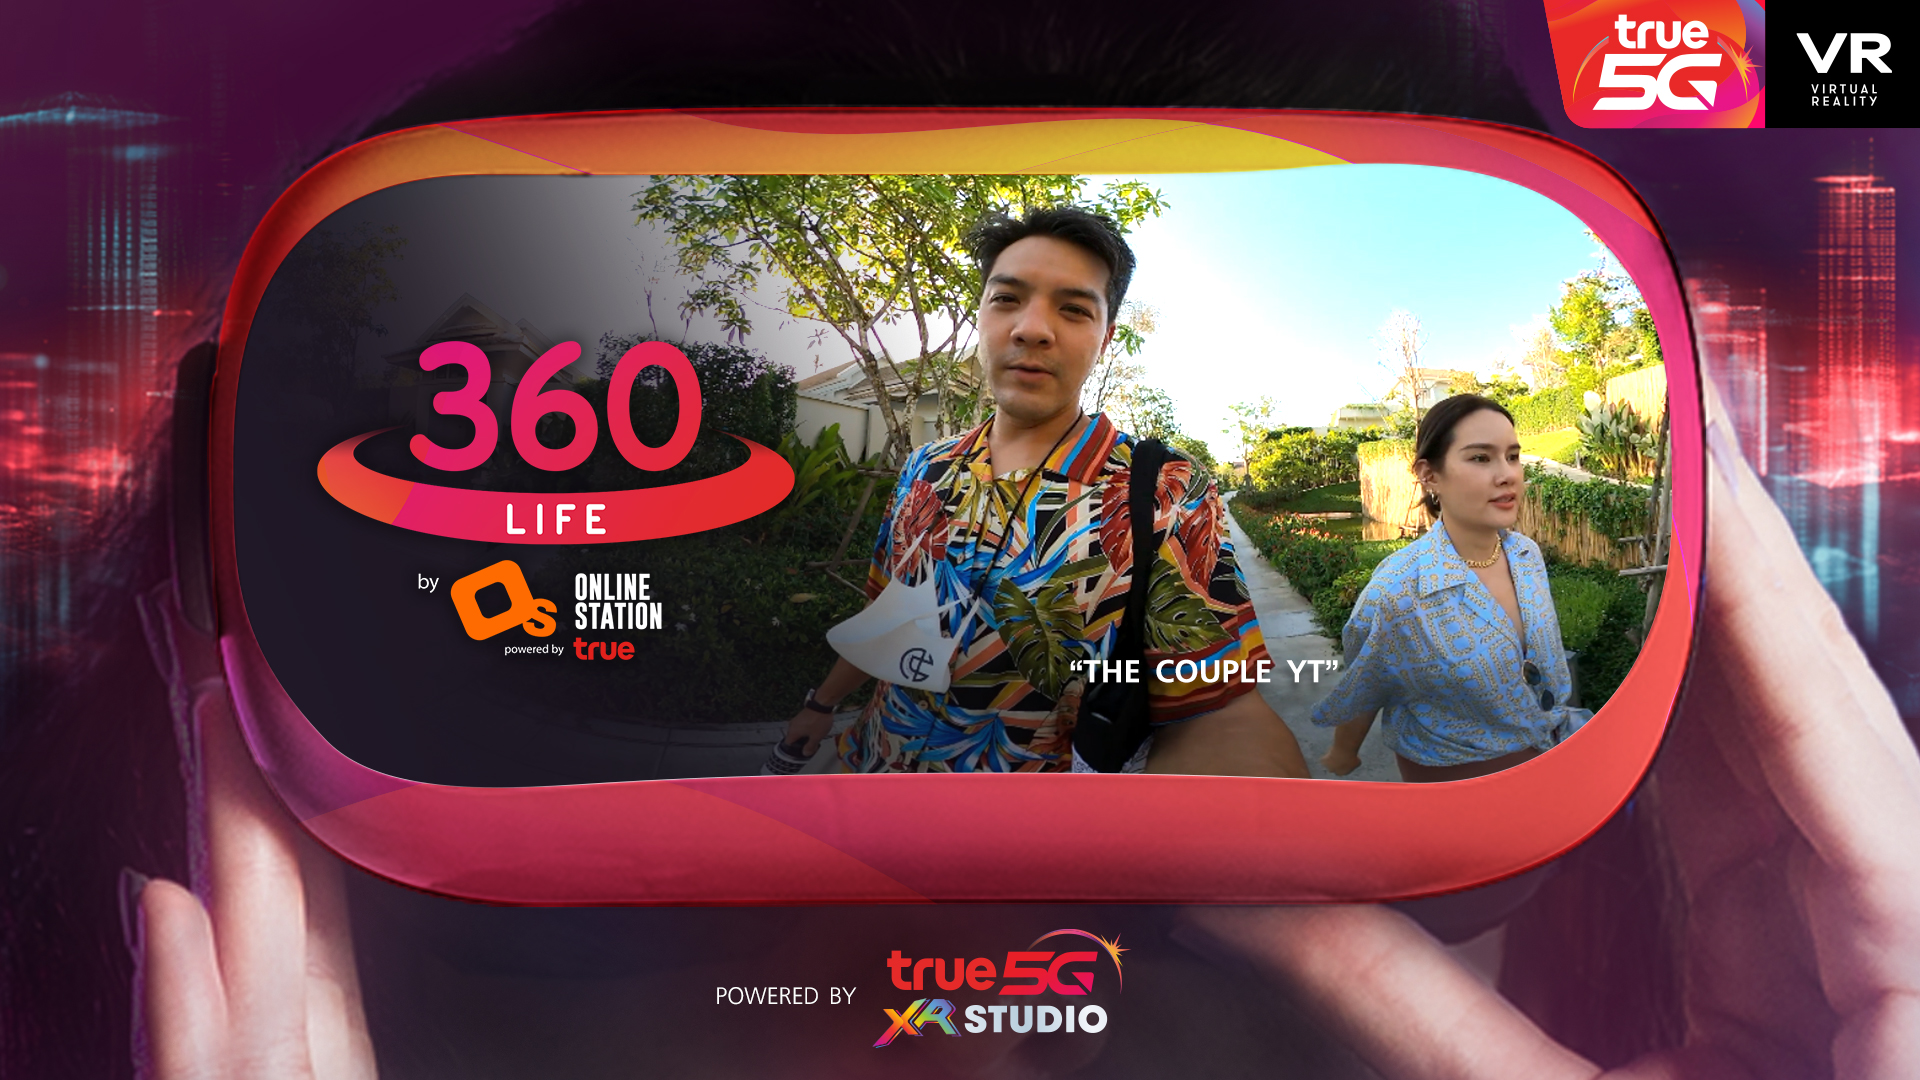 True 5G XR Studio ผนึก Online Station เปิดโปรเจ็ค 360 LIFE by Online Station เสิร์ฟคอนเทนต์ 5G อัจฉริยะเสมือนจริง 360 องศา